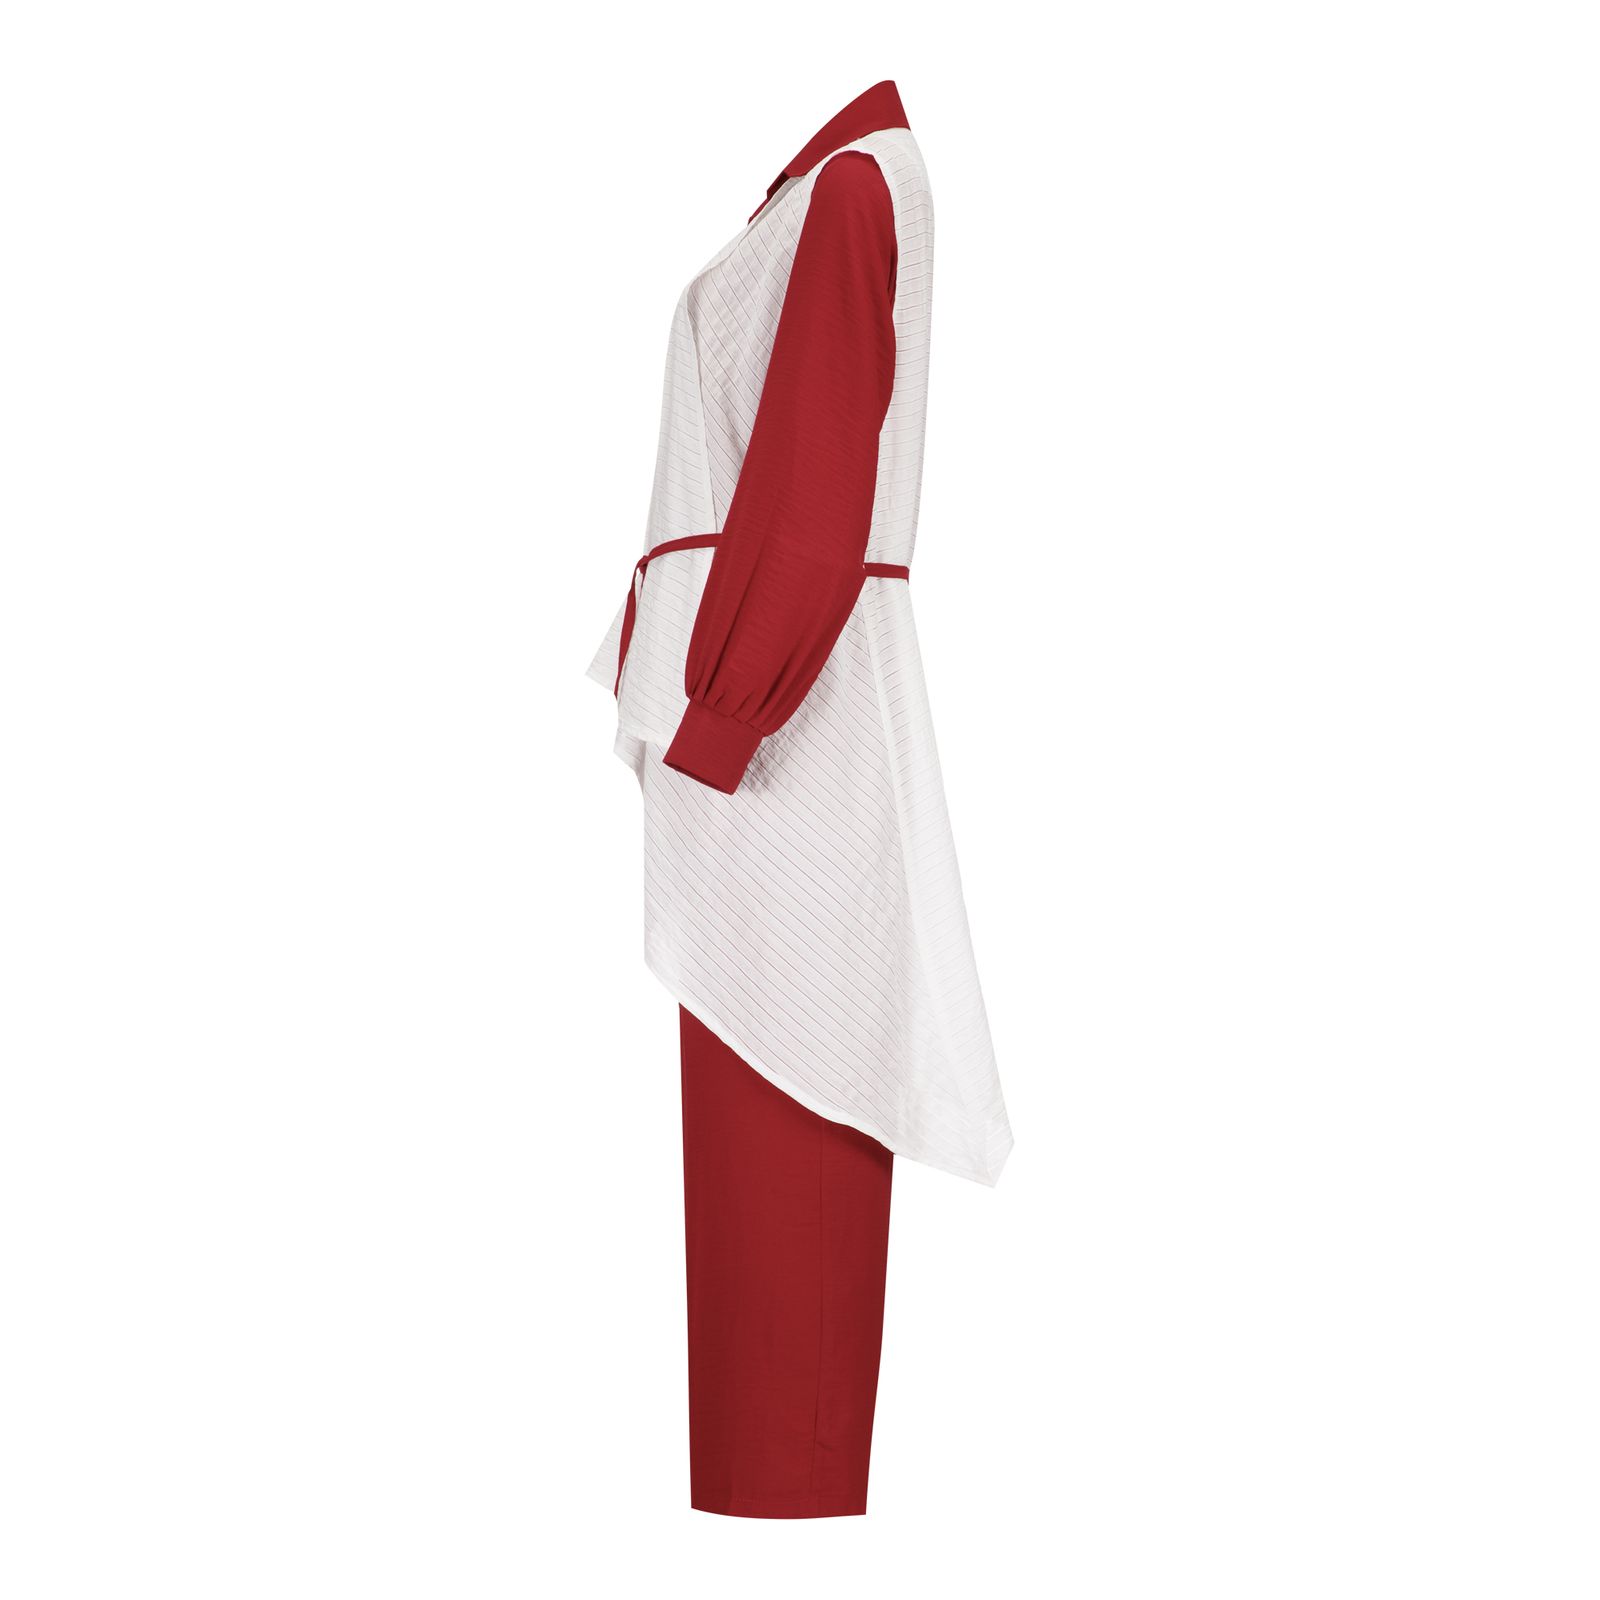 ست 3 تکه لباس زنانه السانا مدل روژیار کد 82841 -  - 7